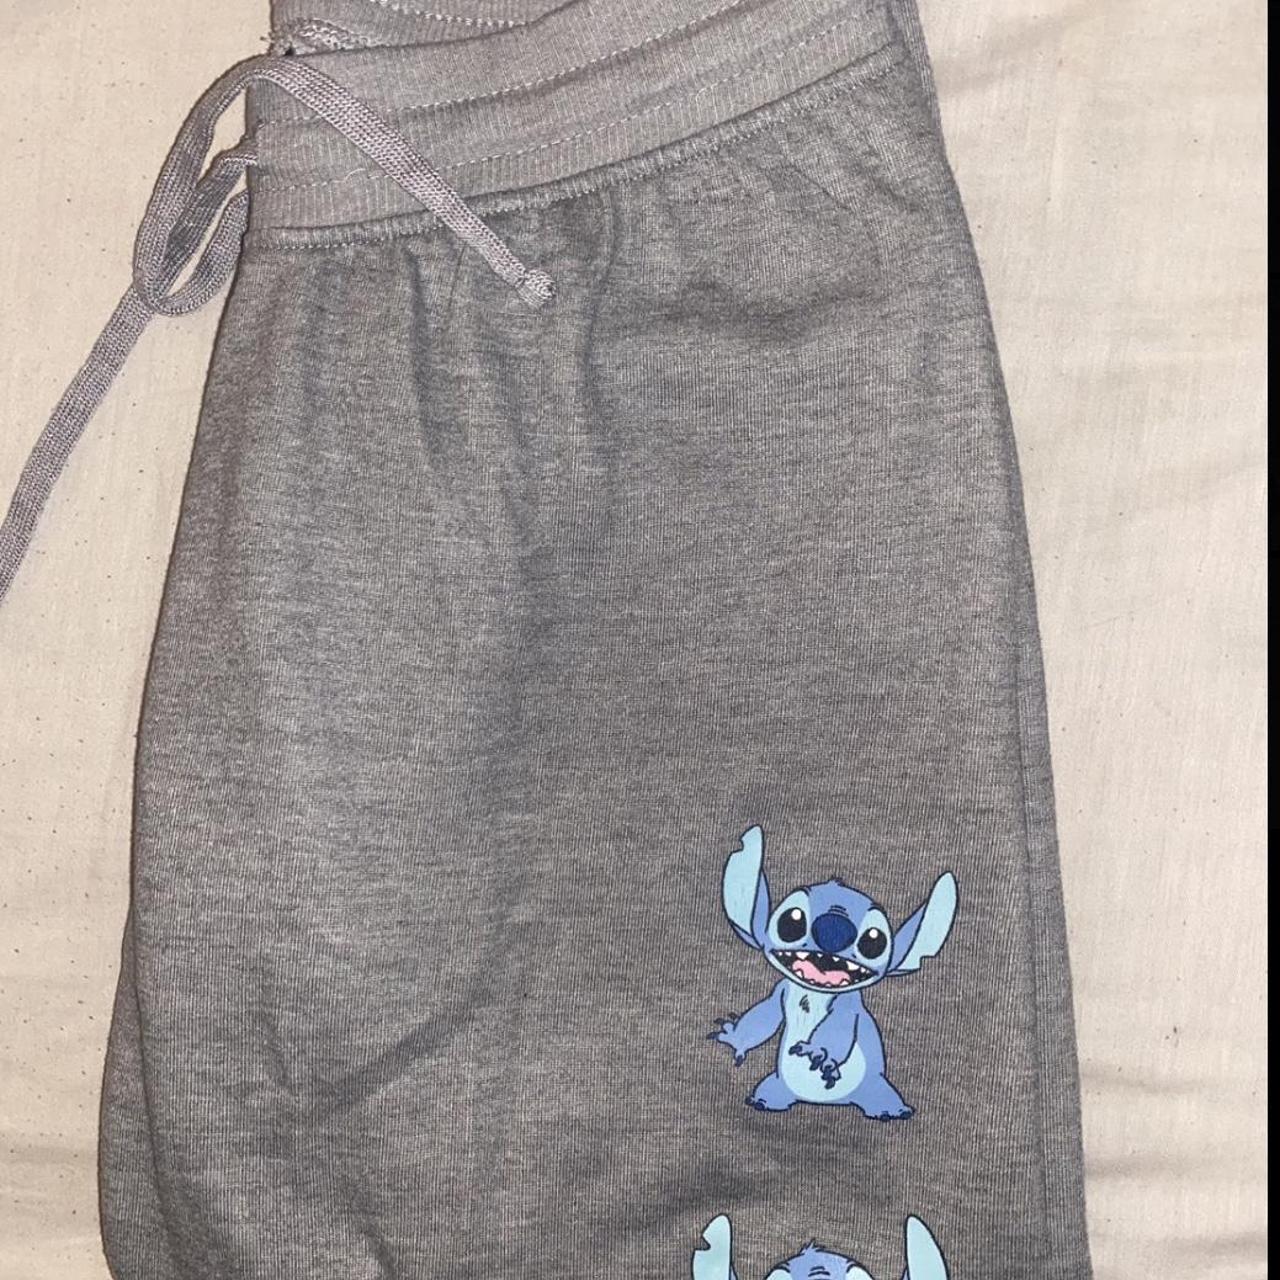 Disney Stitch sweatpants size large